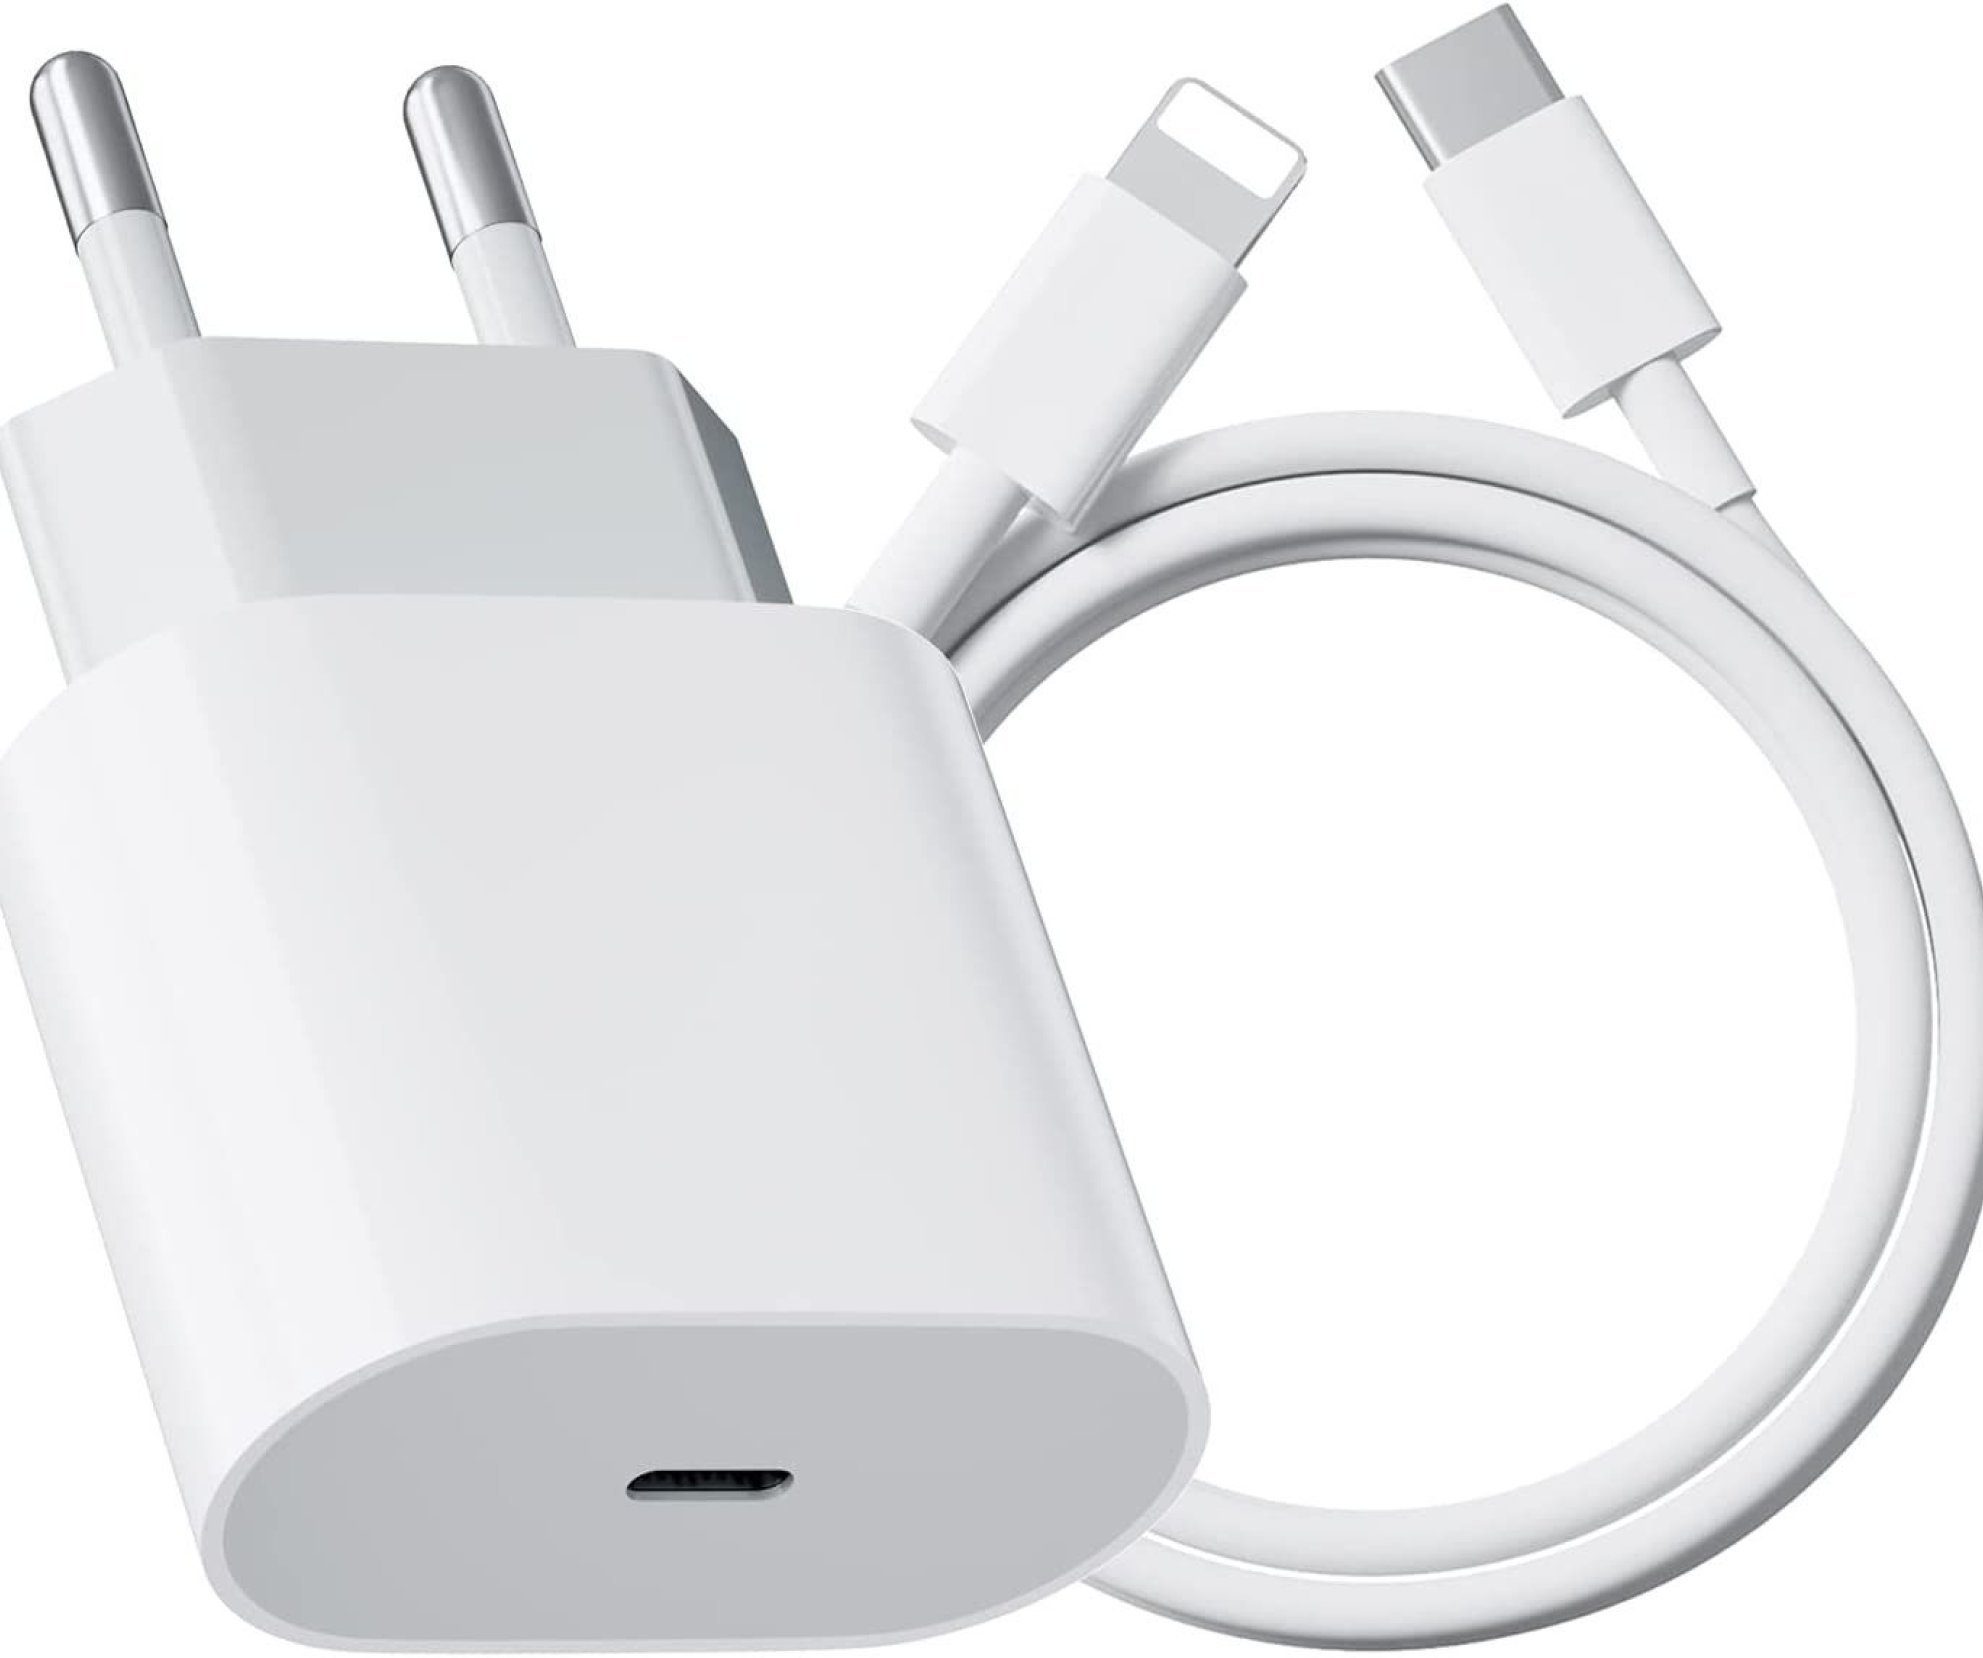 Futurea Schnellladegerät USB C Ladekabel Adapter Smartphone